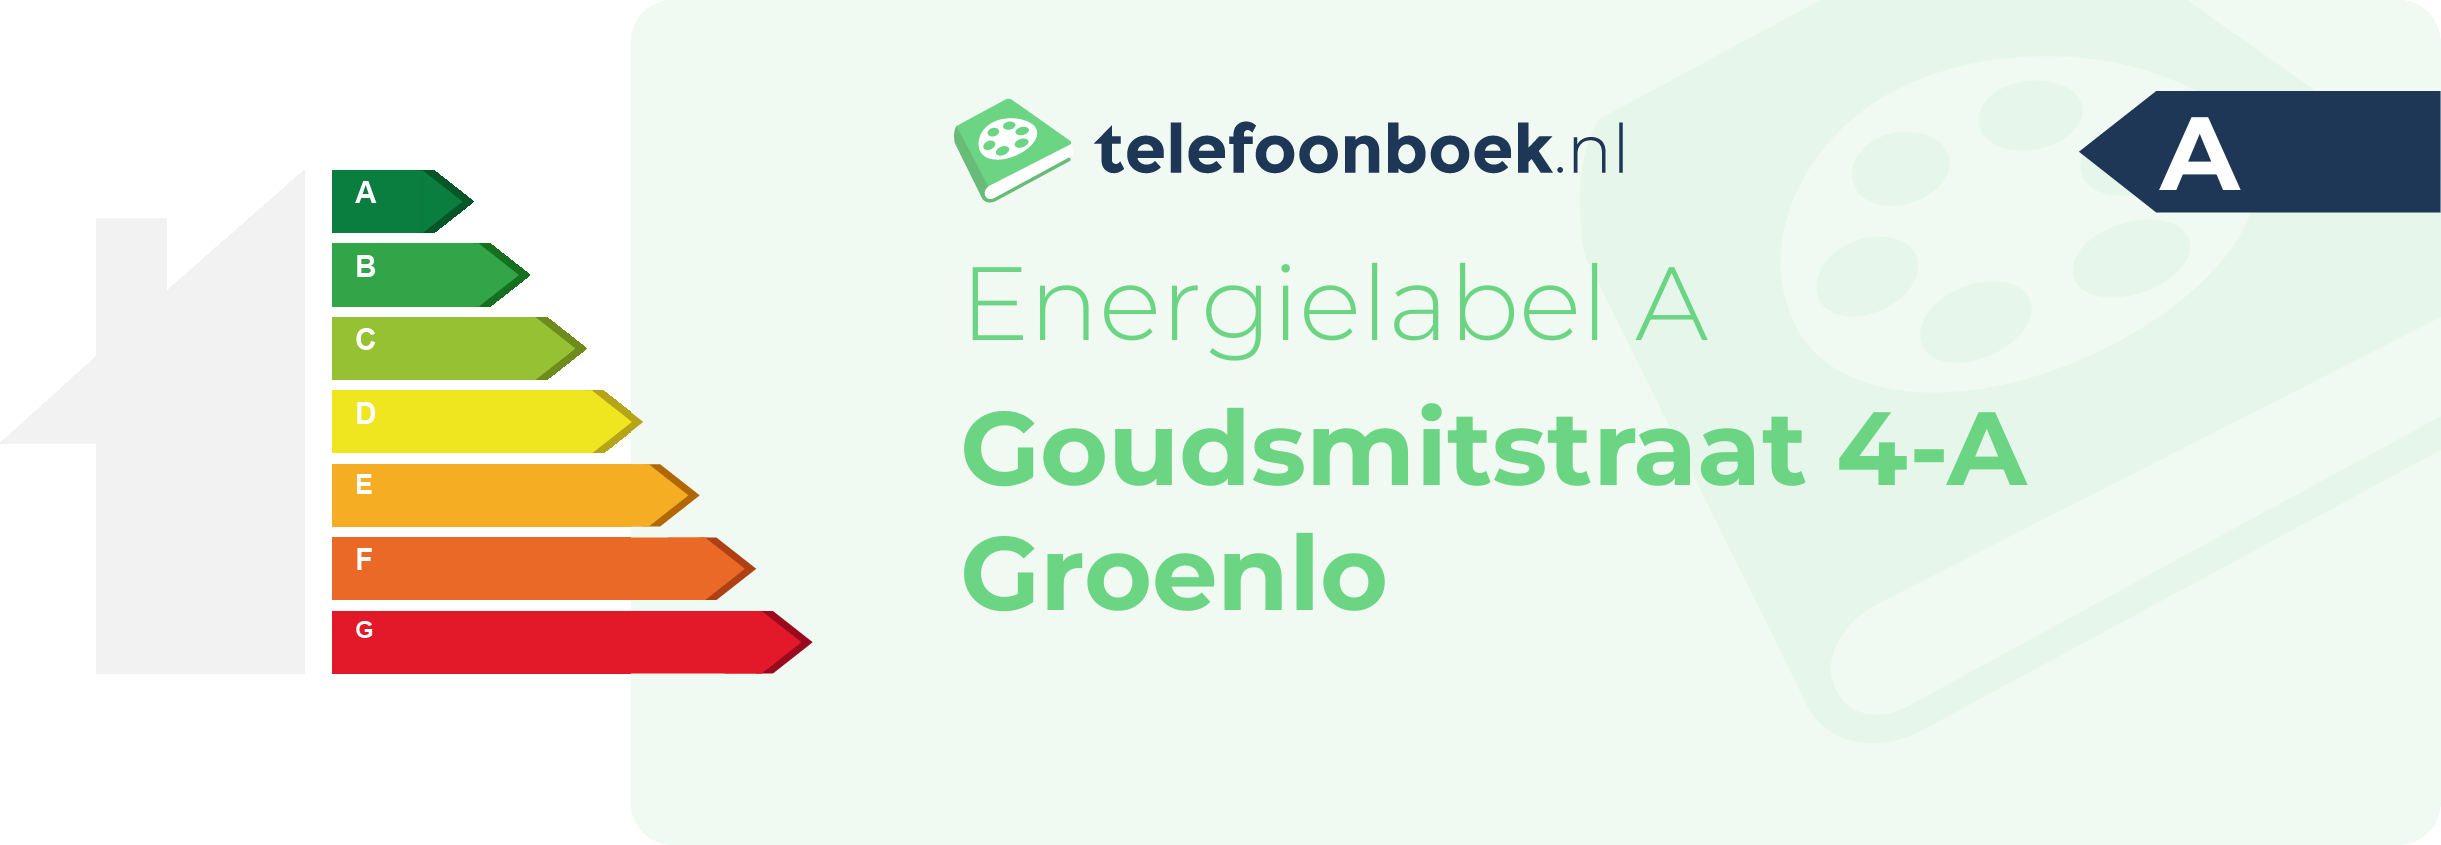 Energielabel Goudsmitstraat 4-A Groenlo